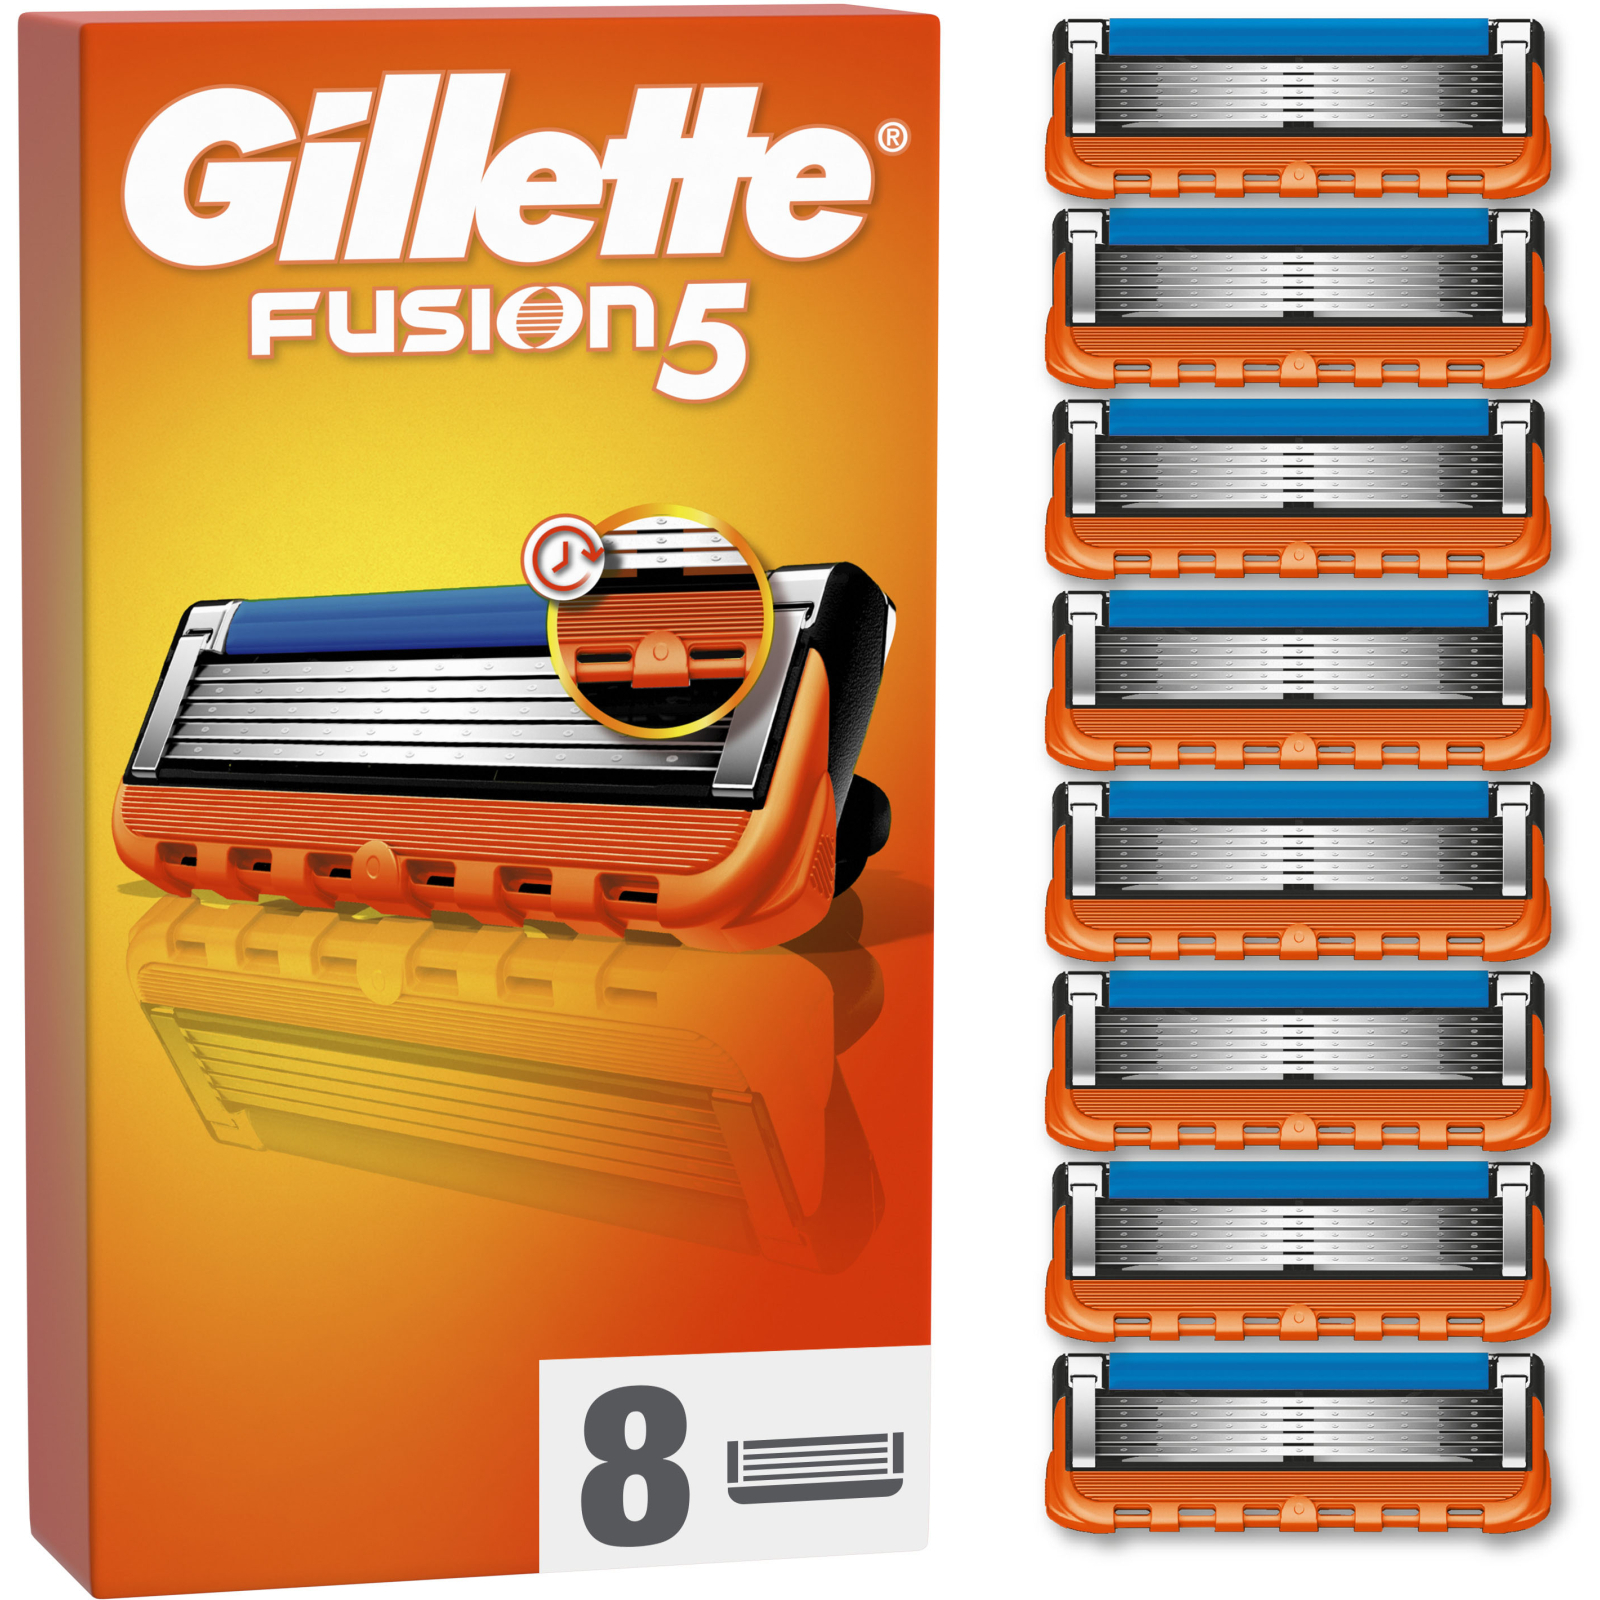 Змінні касети Gillette Fusion5 4 шт. (7702018874460/7702018866984)